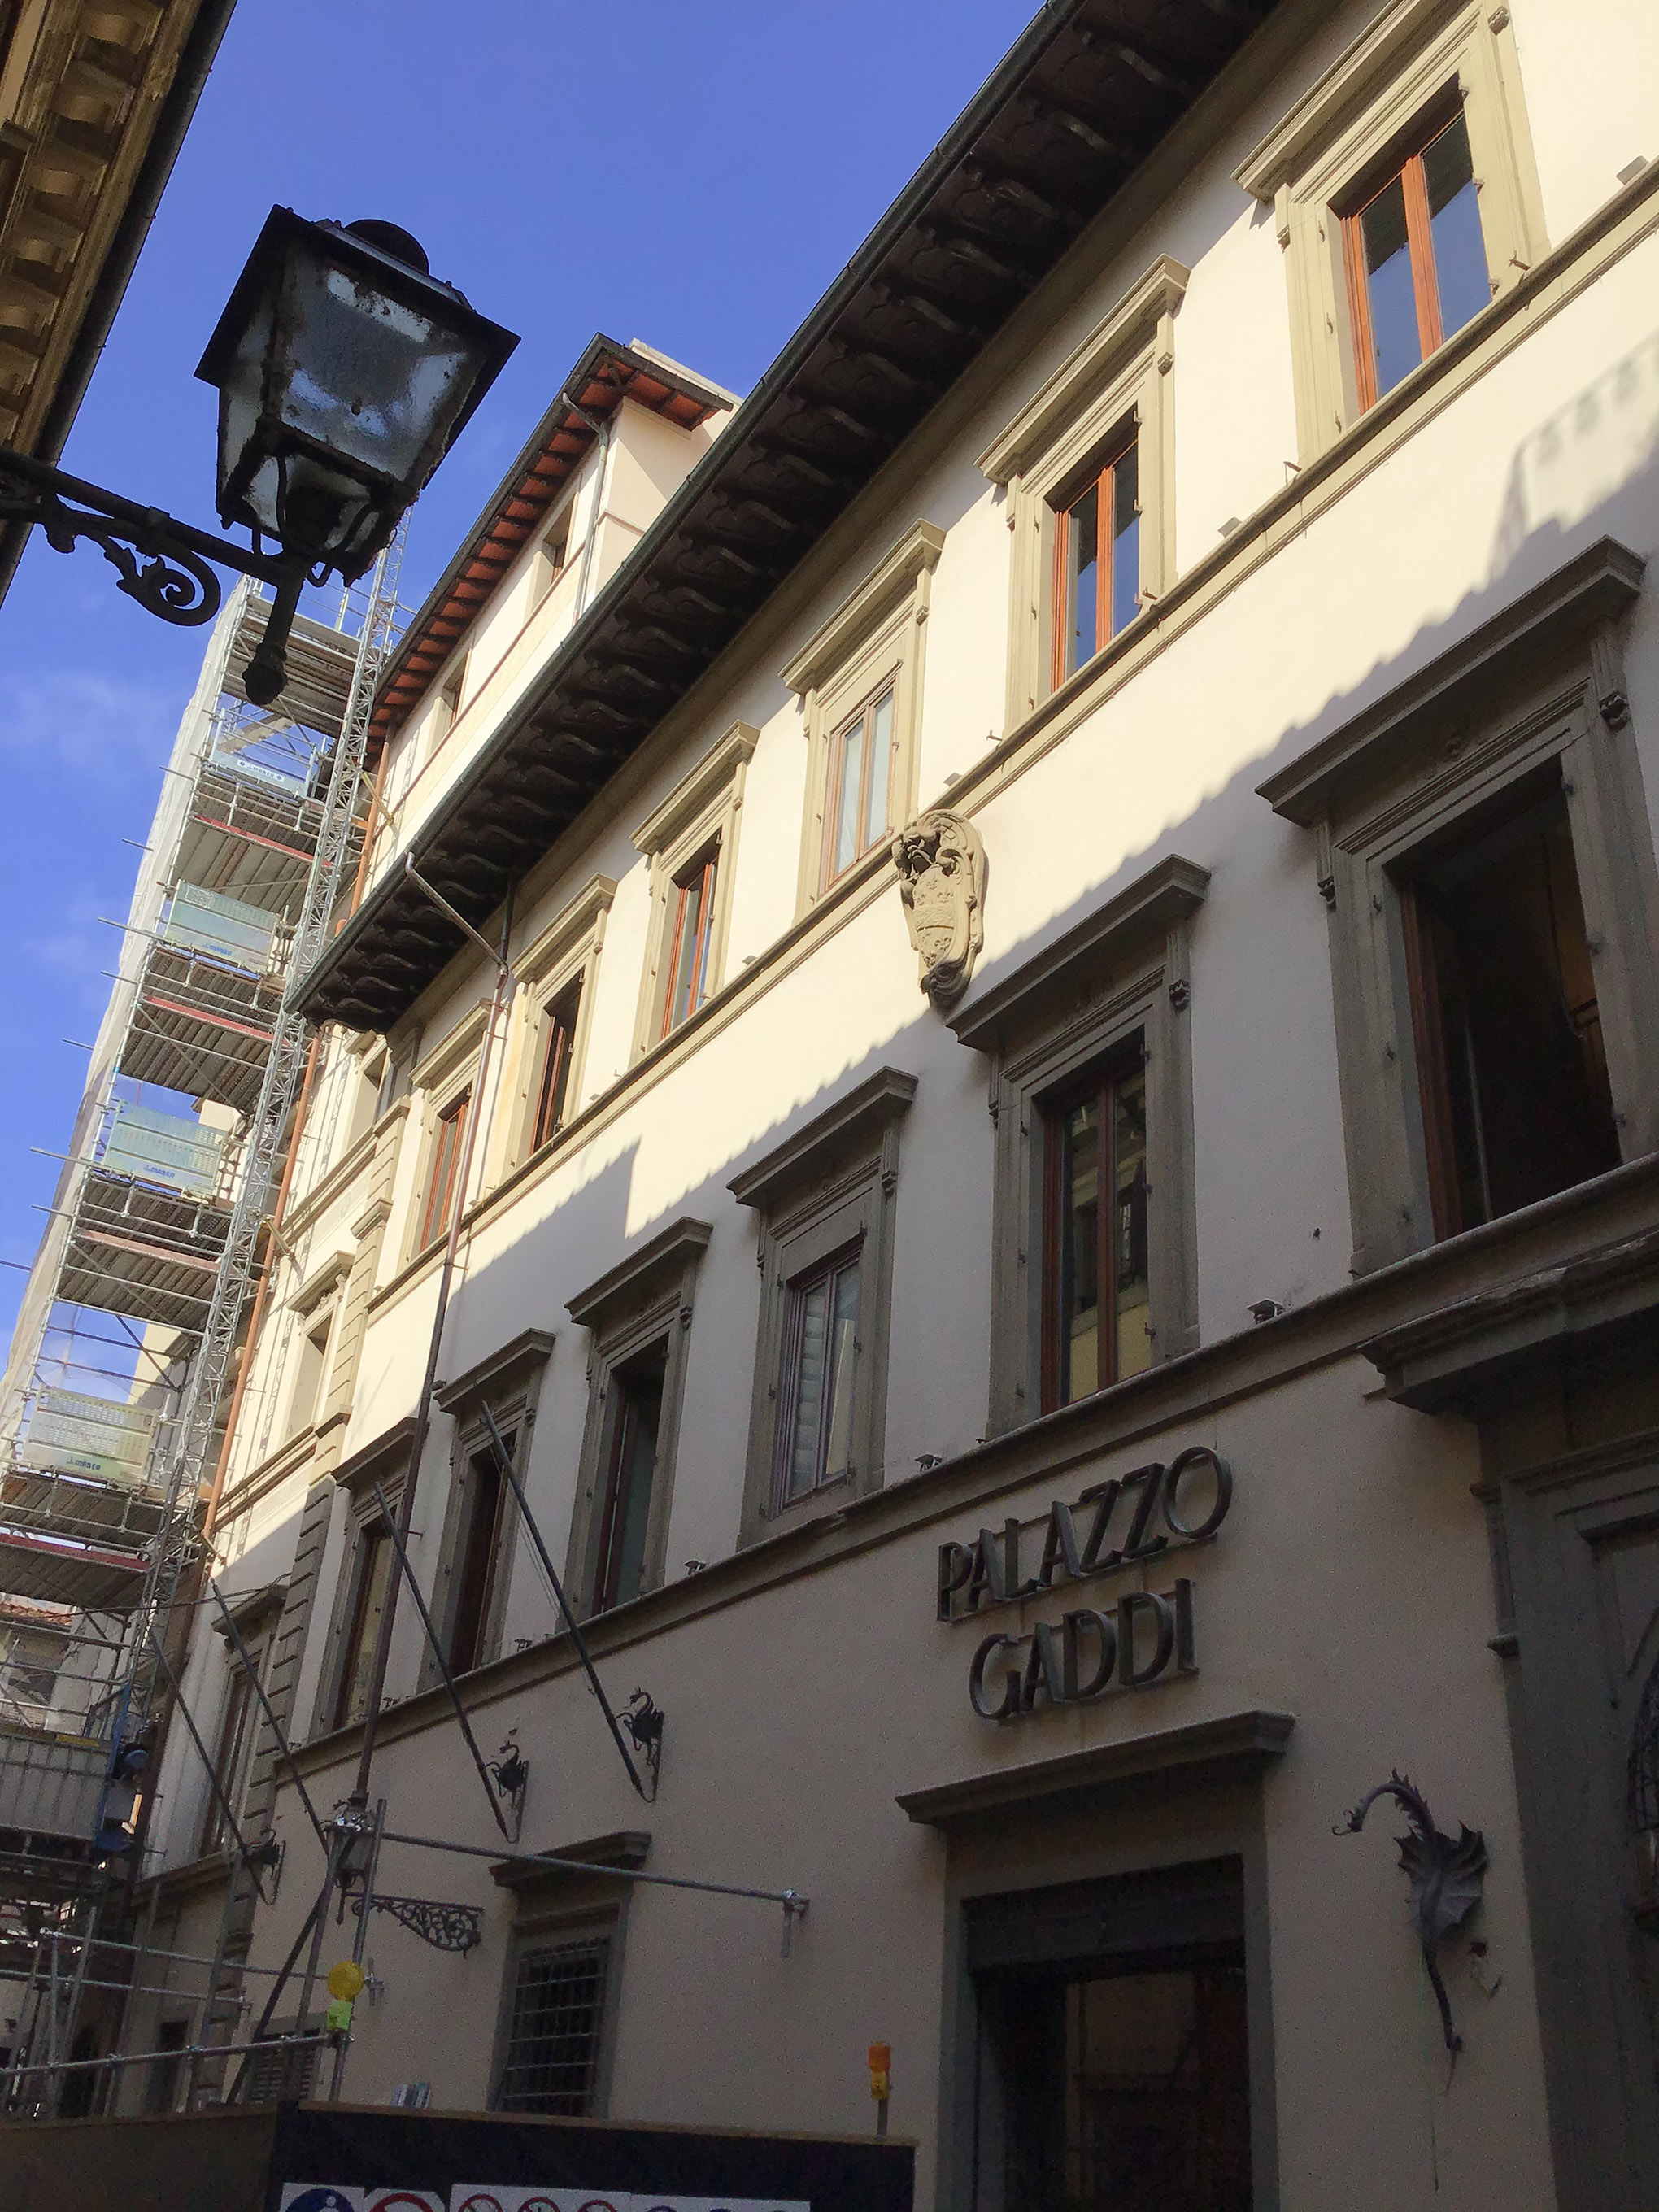 Palazzo Gaddi (palazzo, nobiliare) - Firenze (FI) 